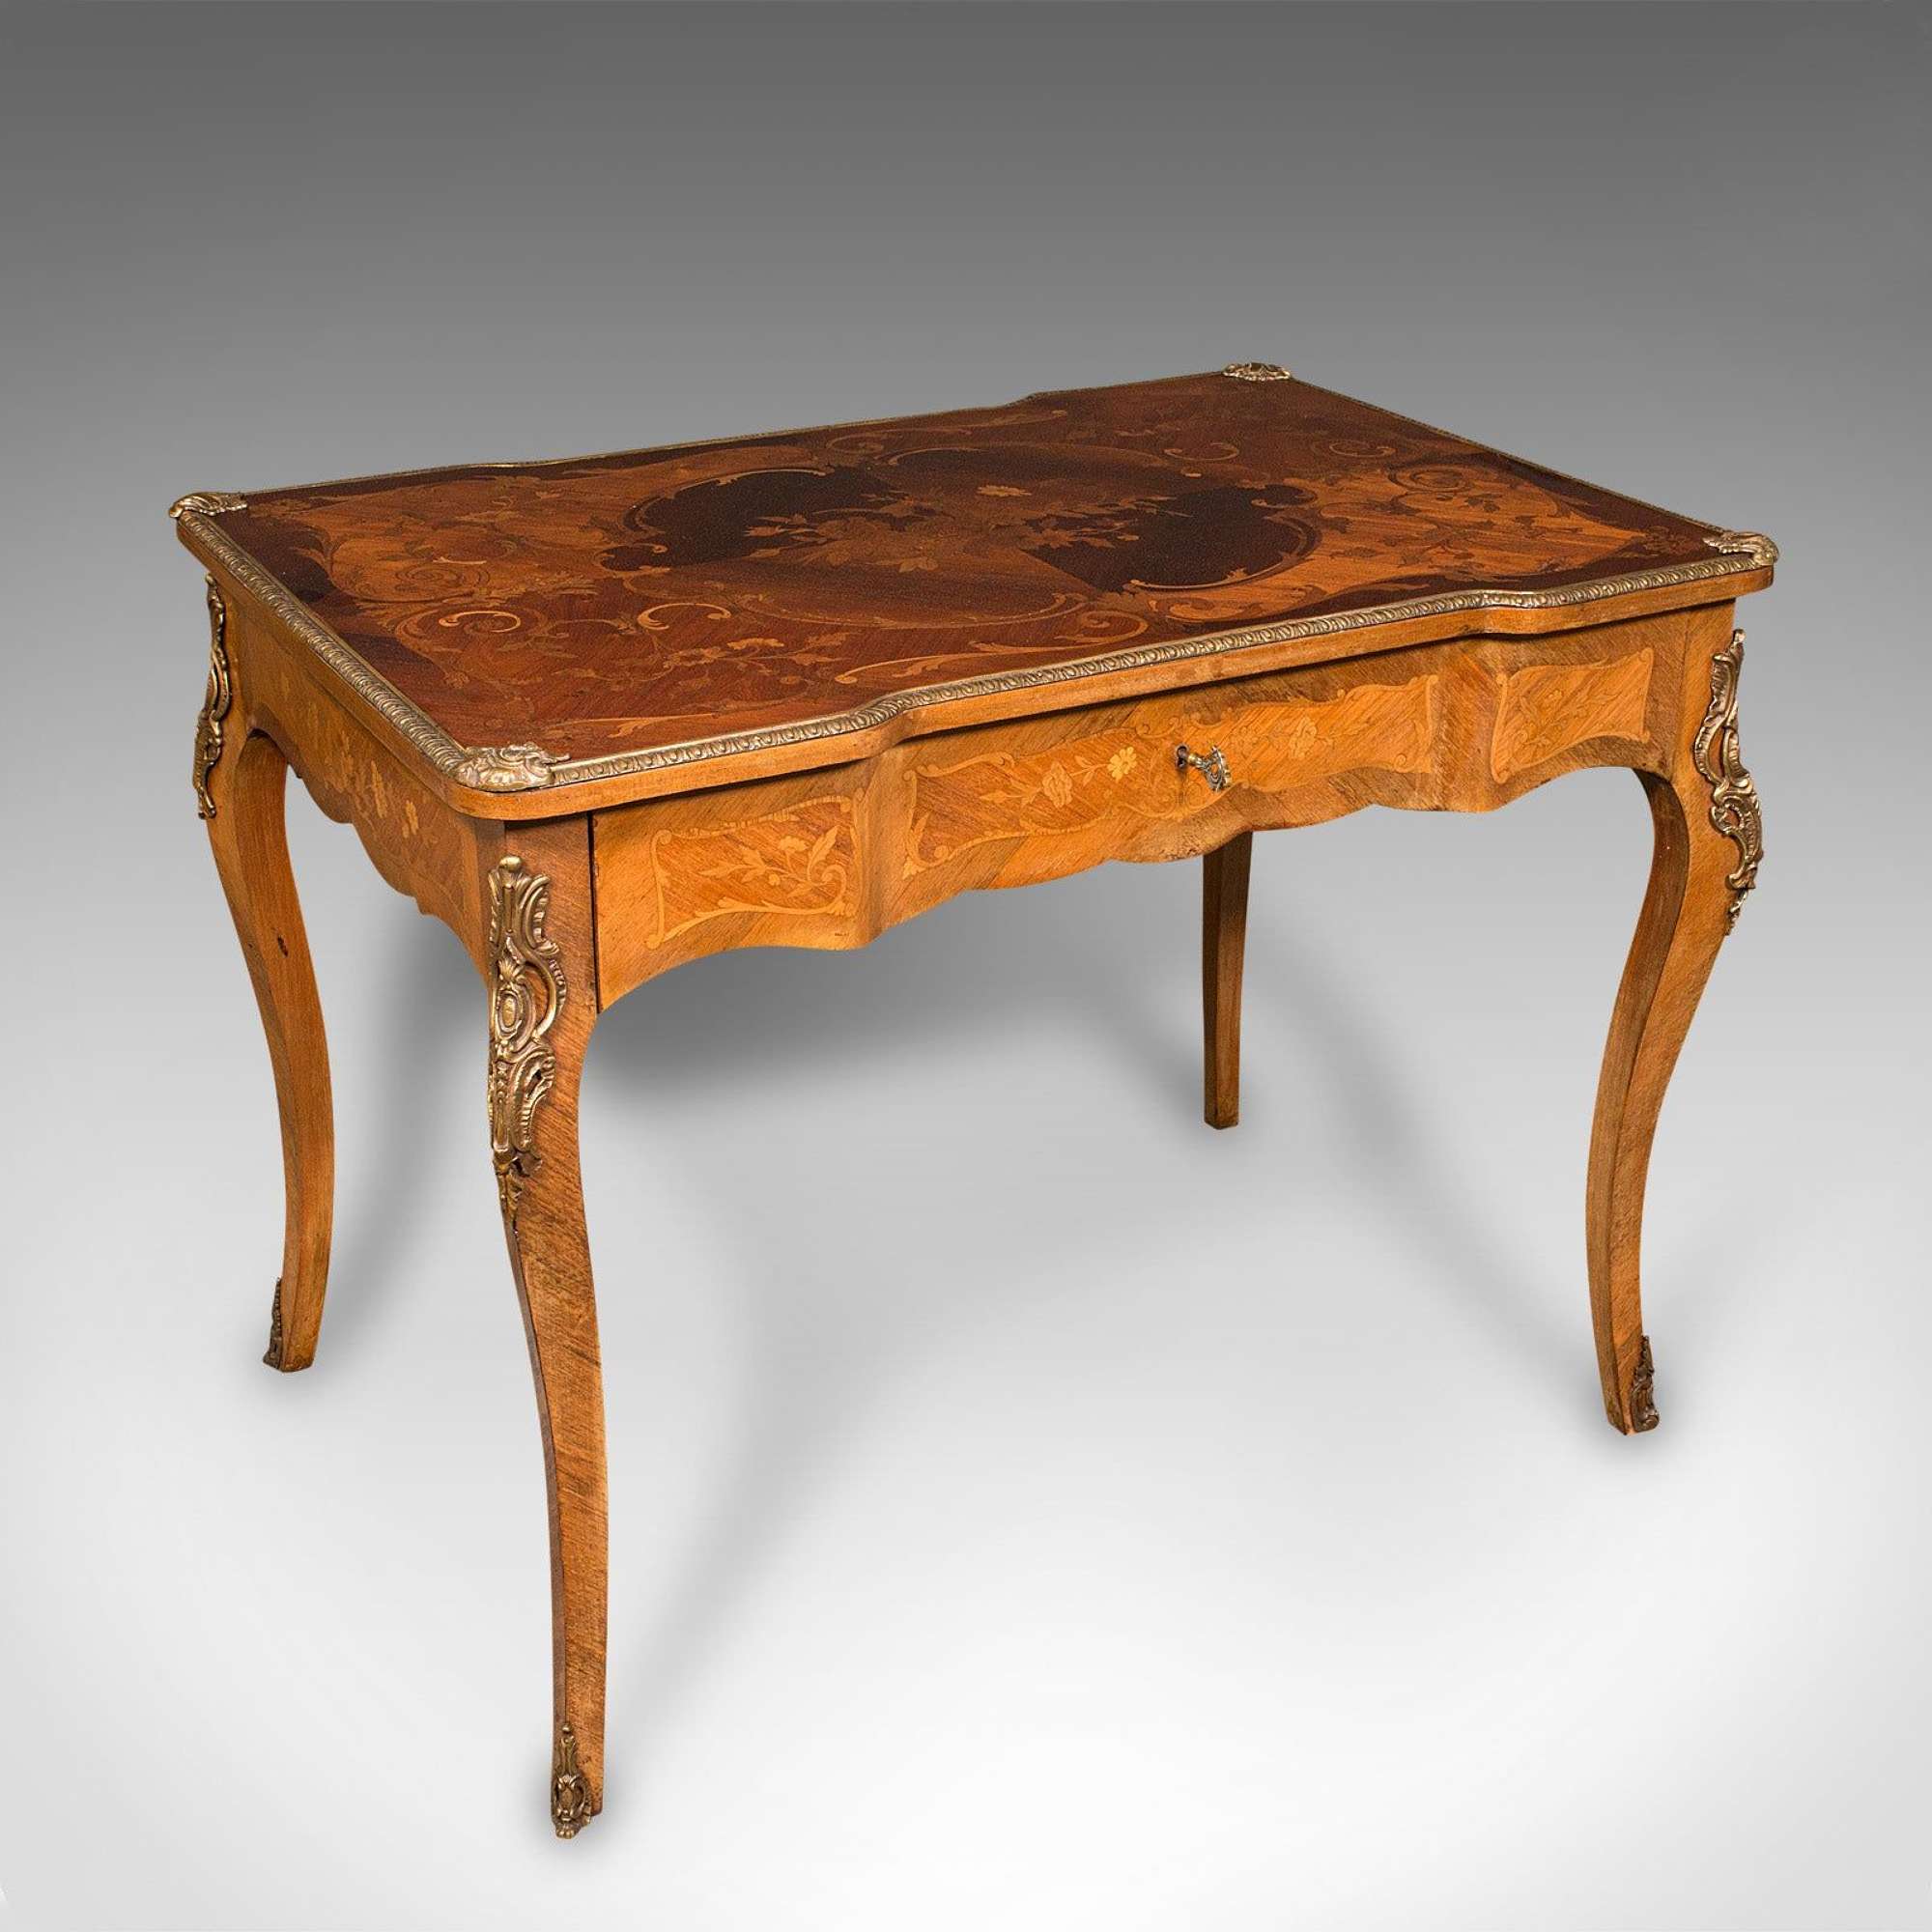 Antique Writing Desk, French, Decorative Centre Table, Louis Xv Taste, Victorian